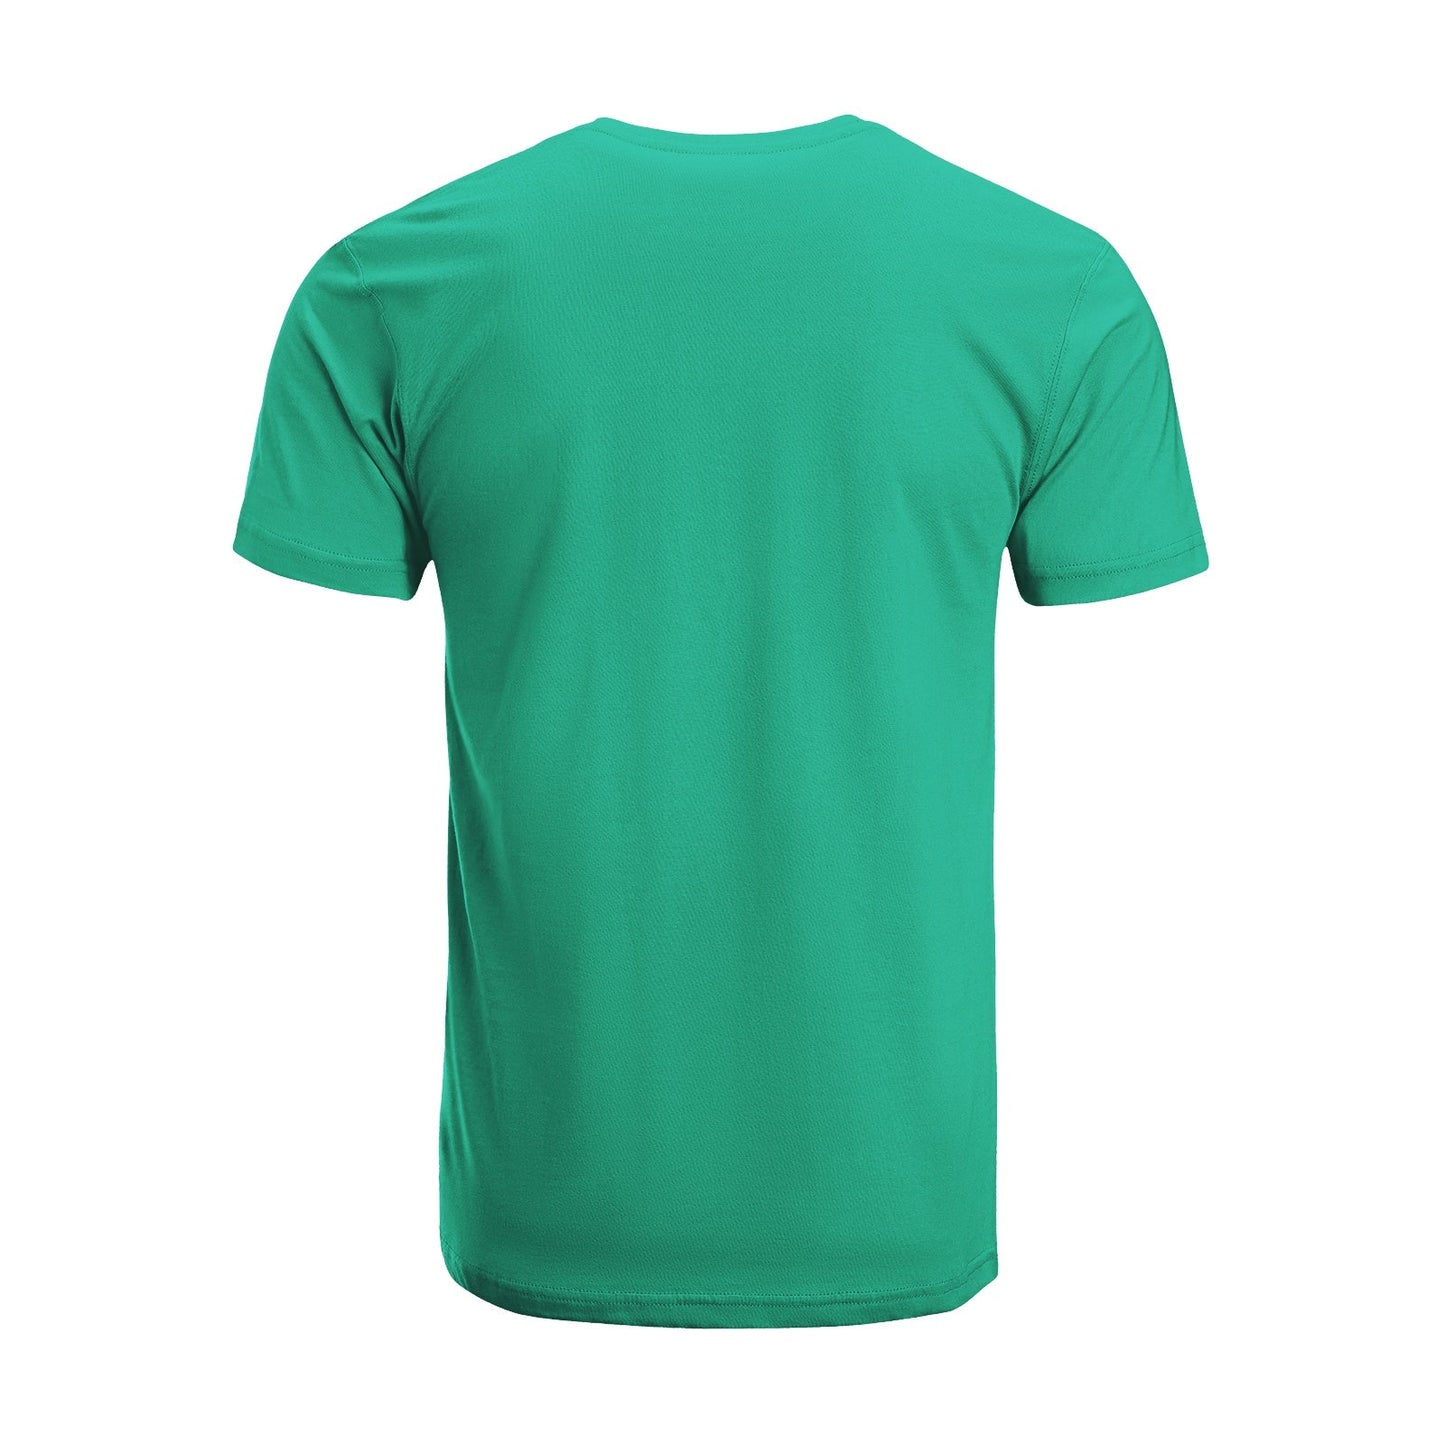 Unisex Short Sleeve Crew Neck Cotton Jersey T-Shirt VEGAN 13